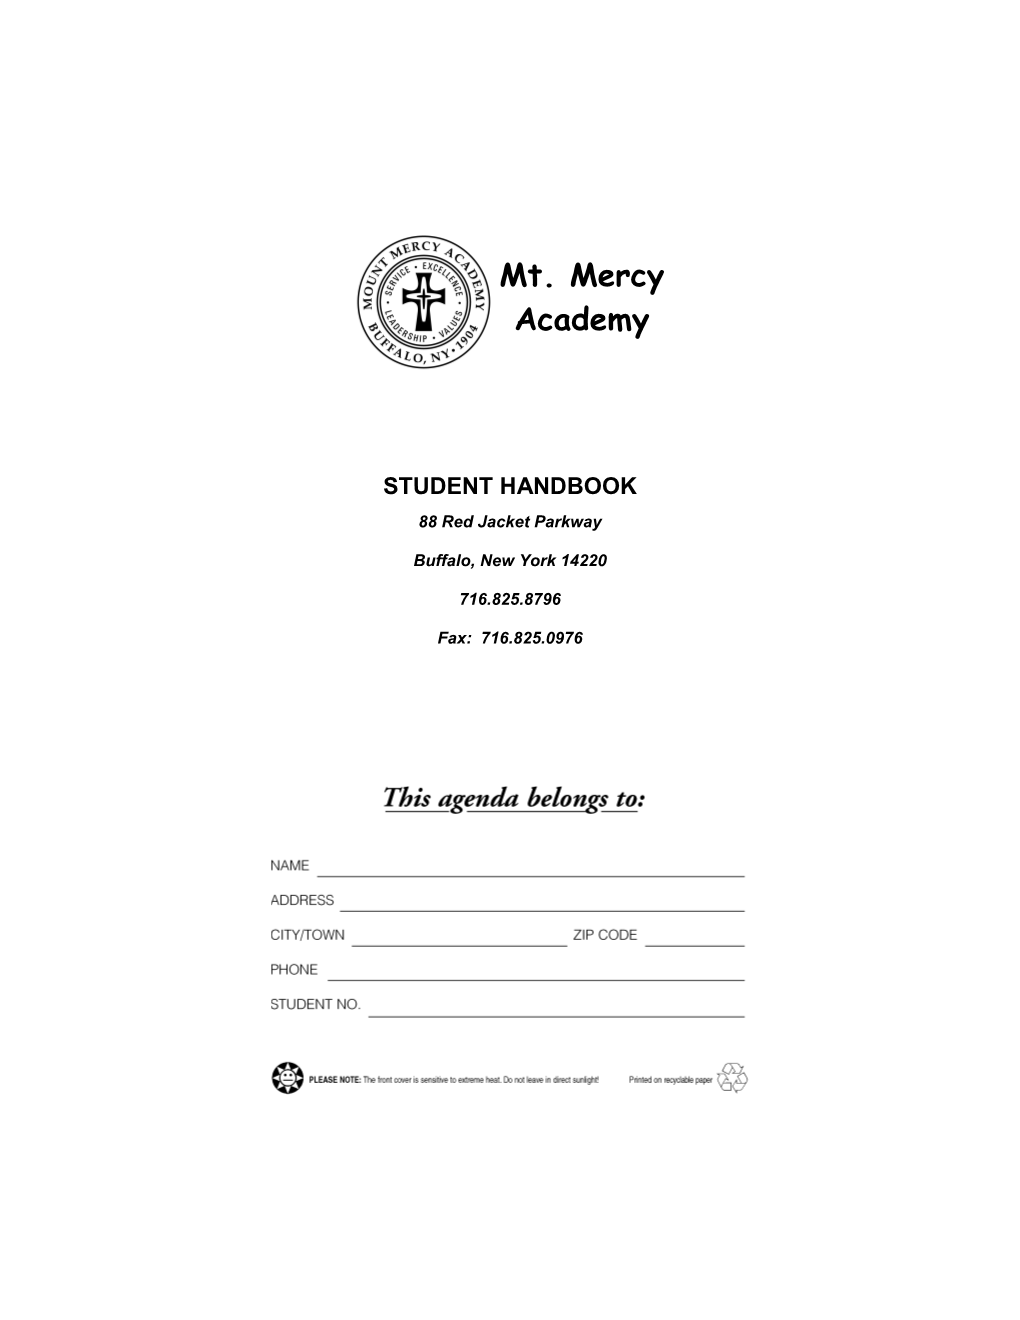 Profile of a Mount Mercy Academy Graduate